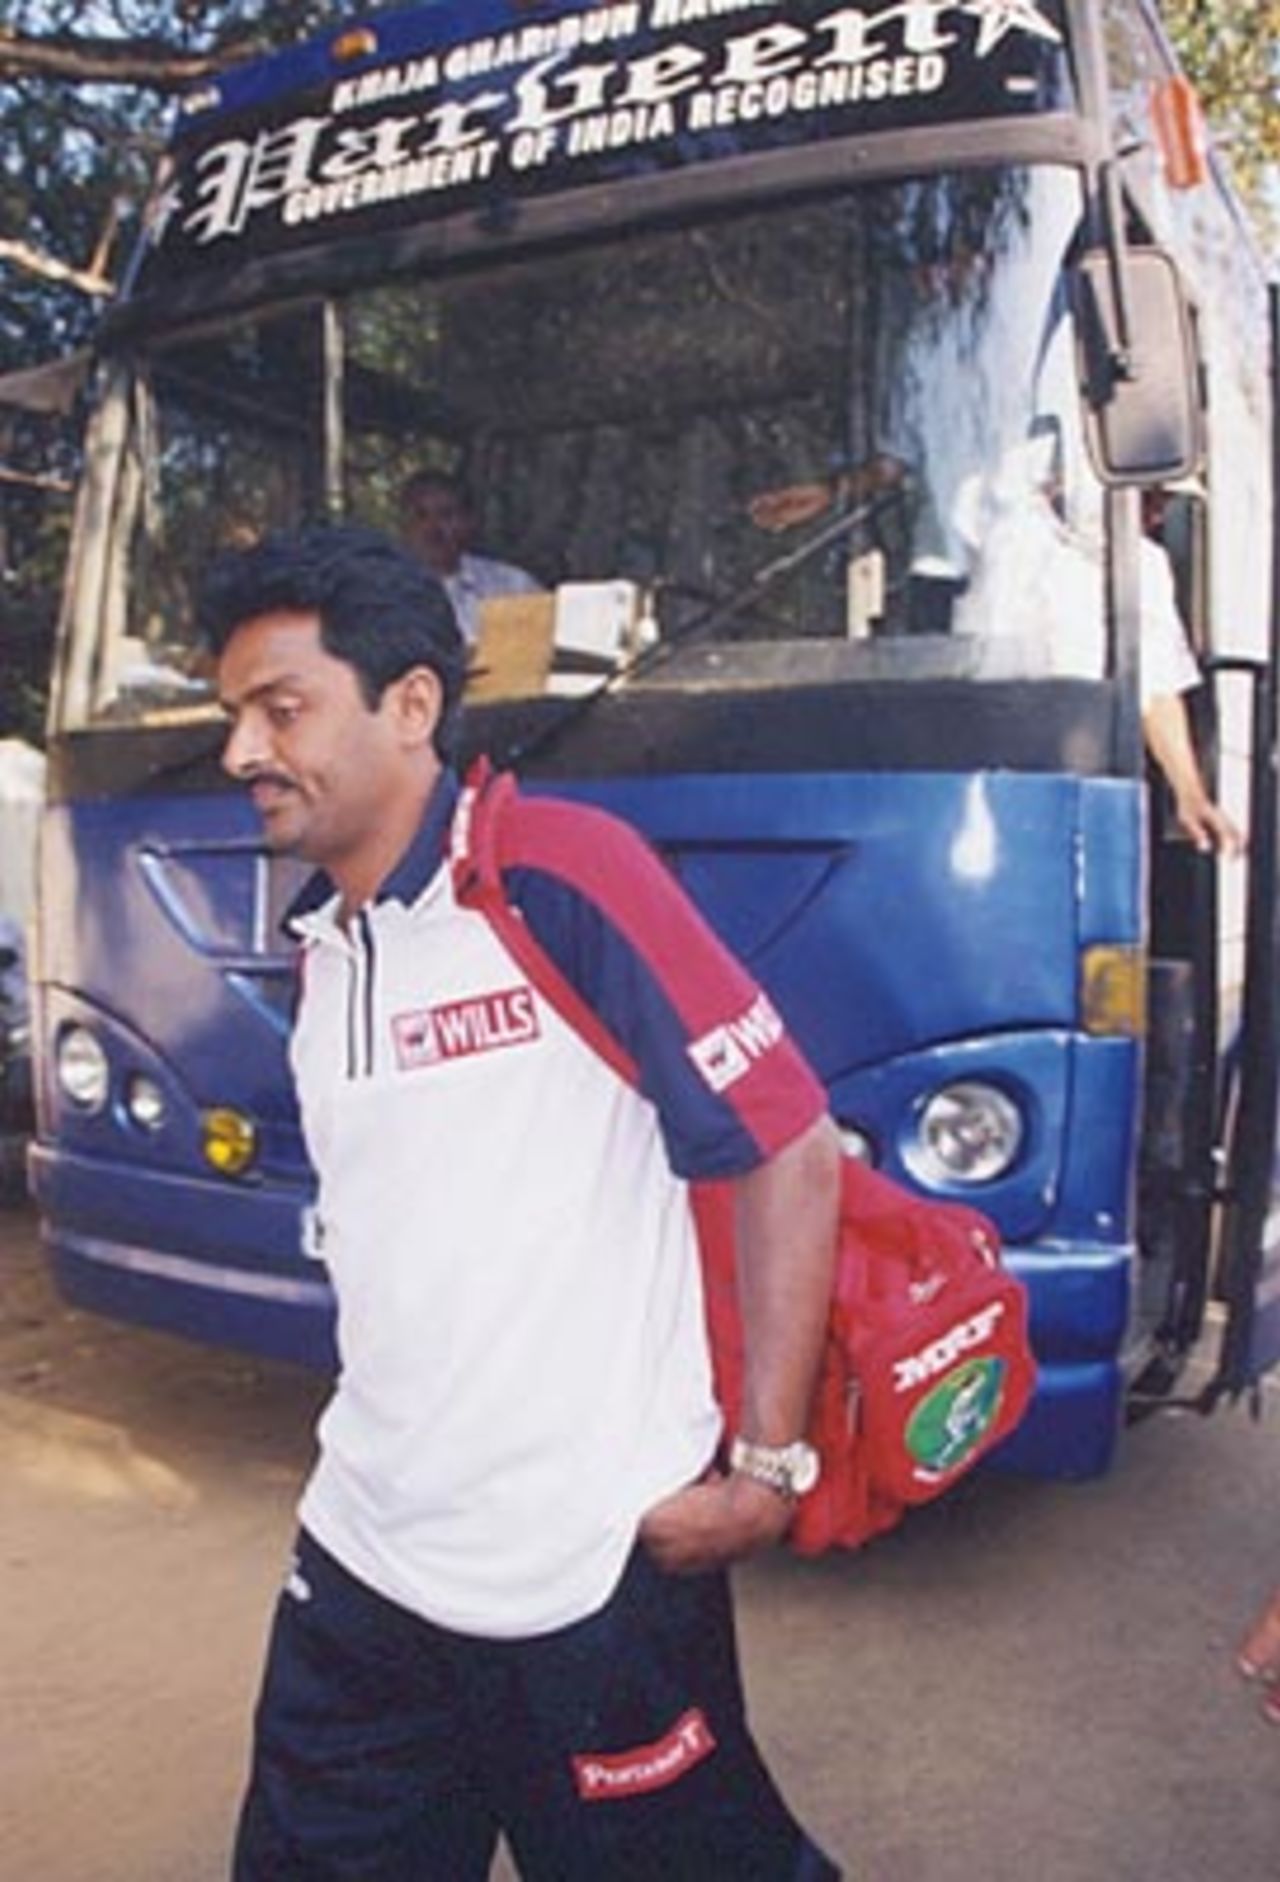 10 Feb 2001: Australia in India Feb-Mar 2001, Conditioning Camp at the IIT Chemplast Ground, Chennai